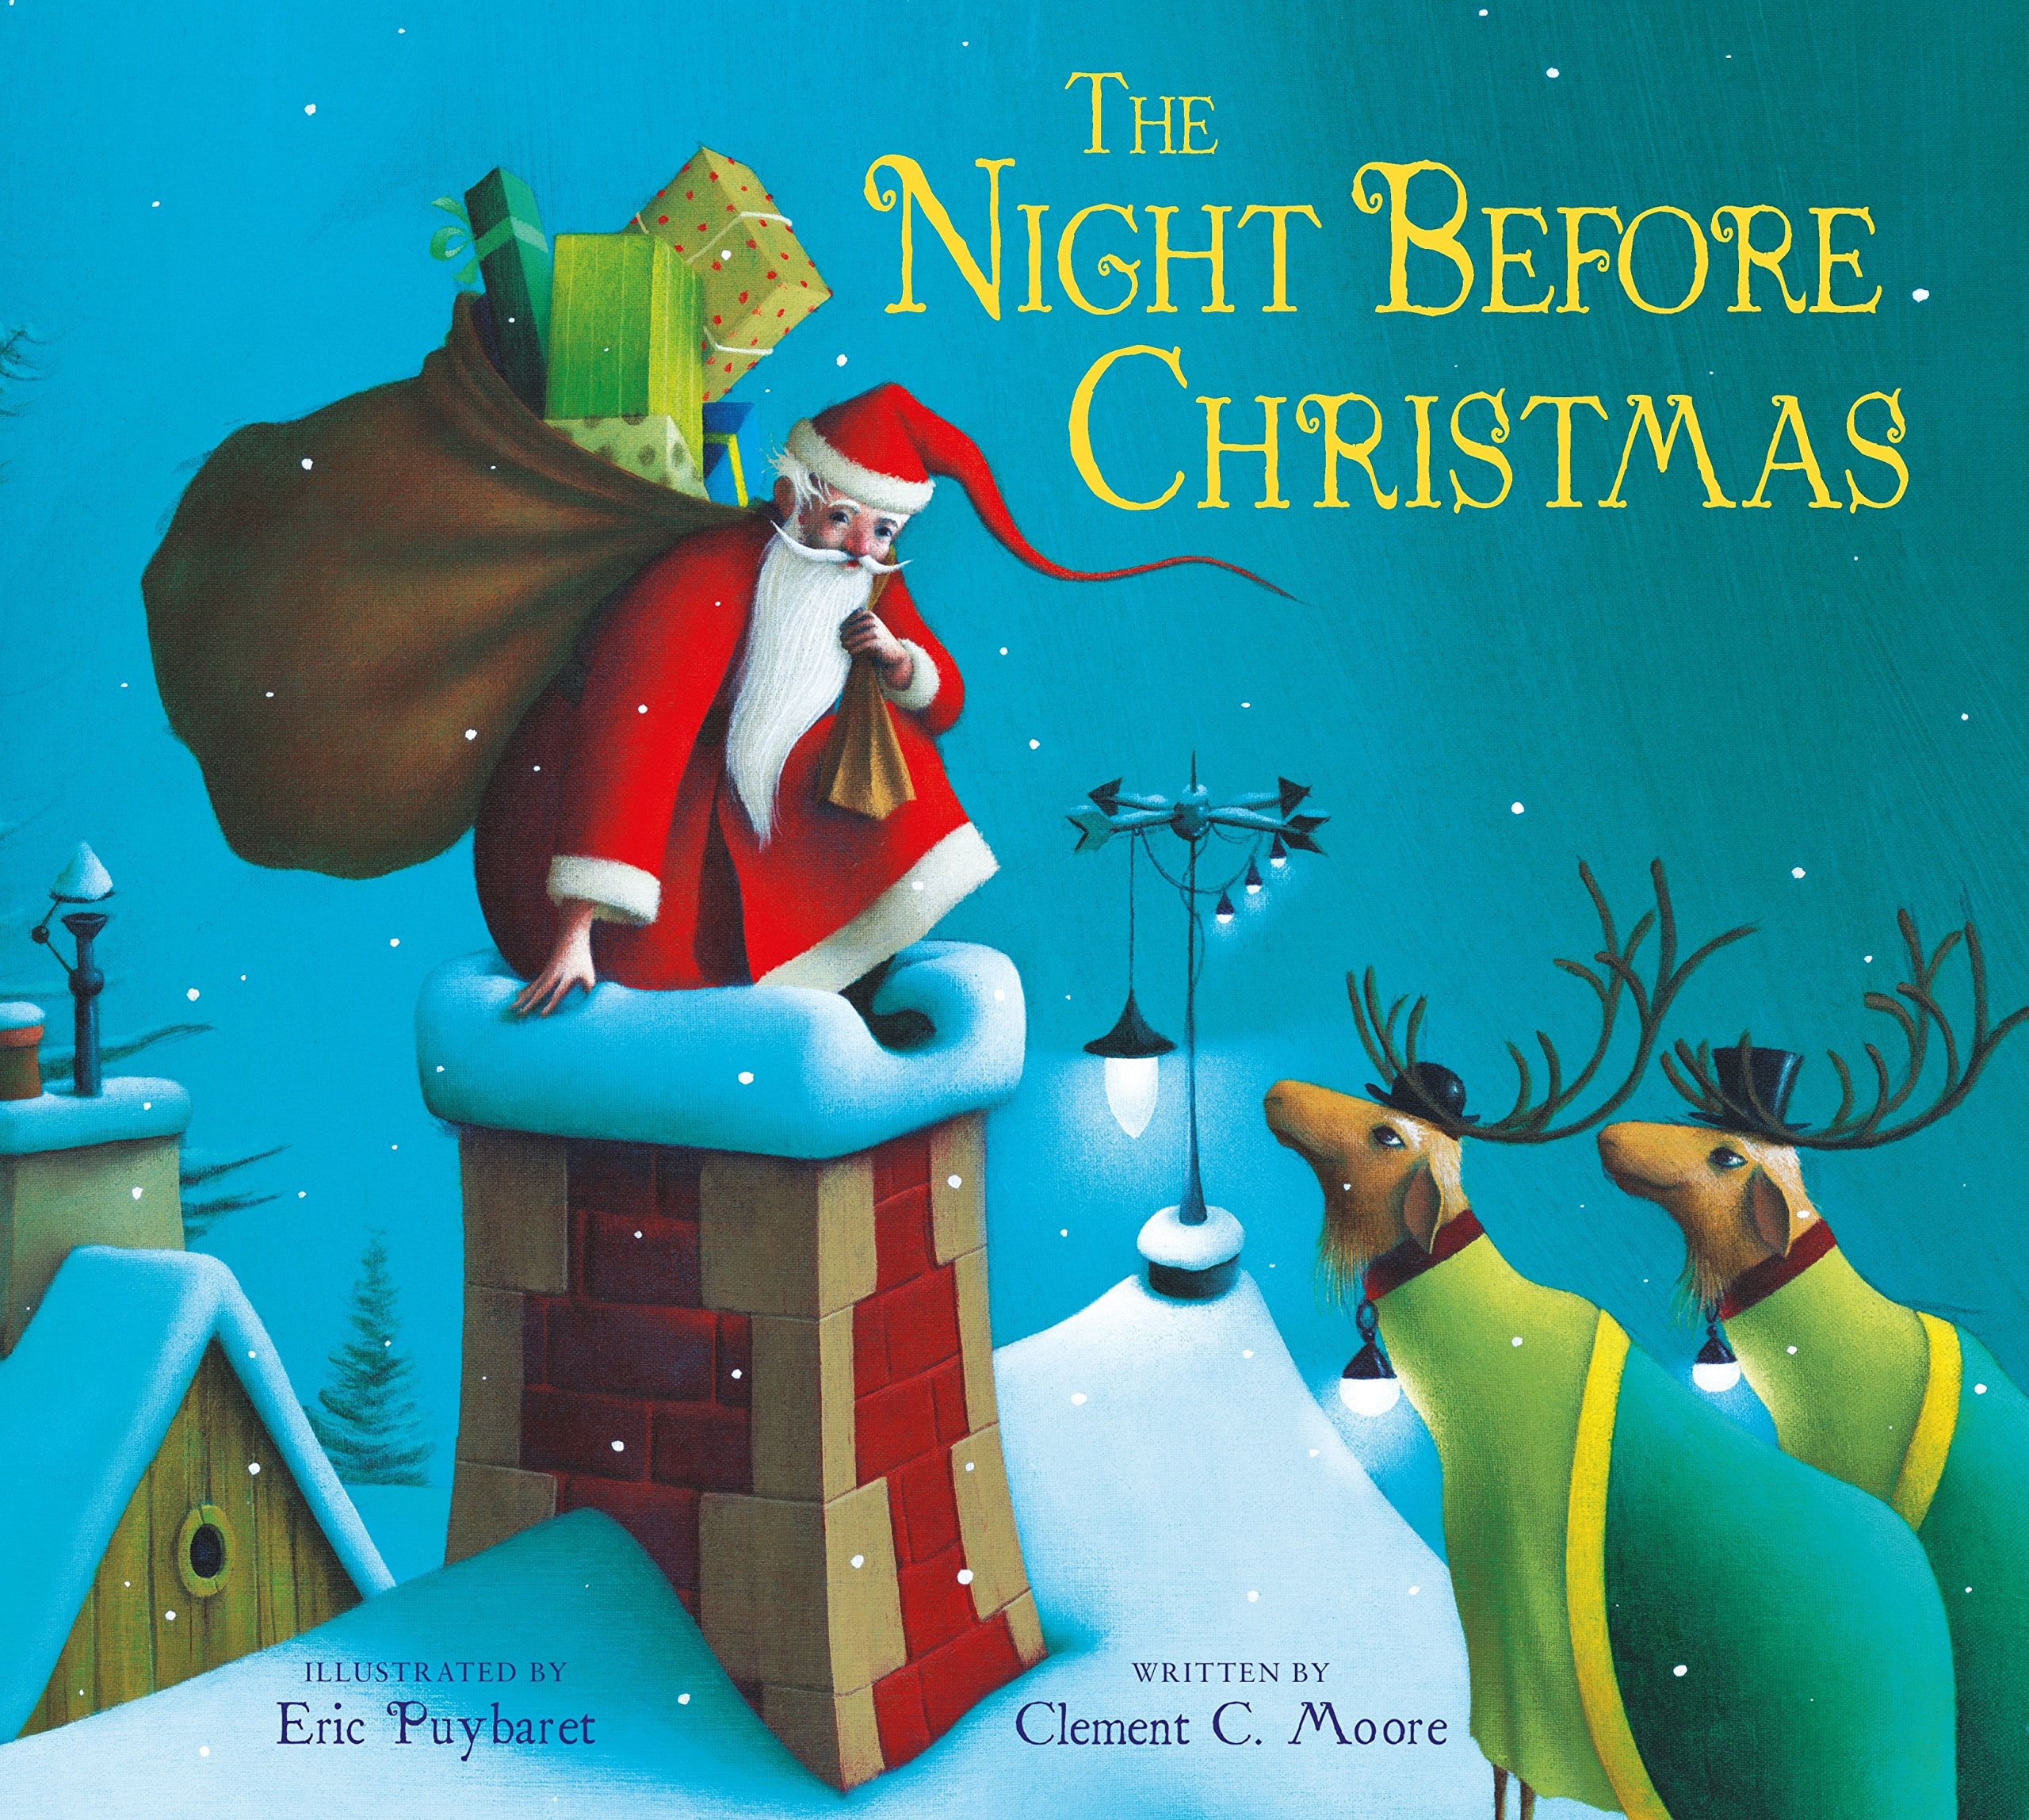 IMG : The Night Before Christmas